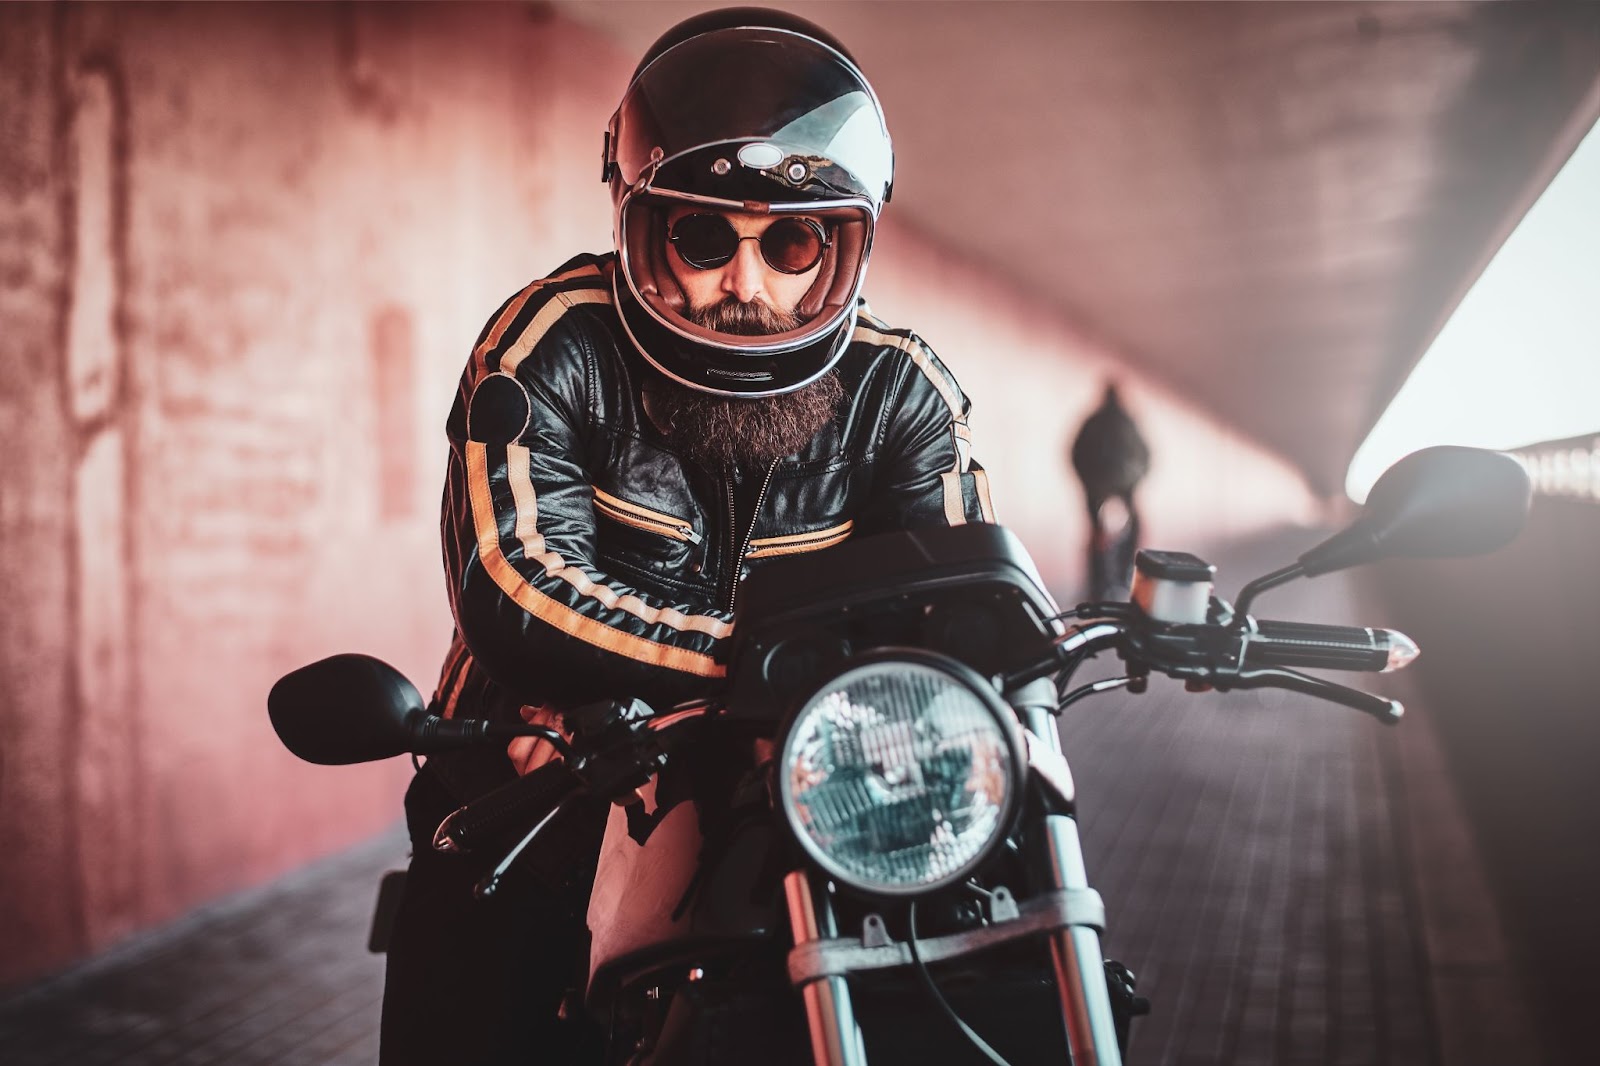 a biker in a helmet on a bike